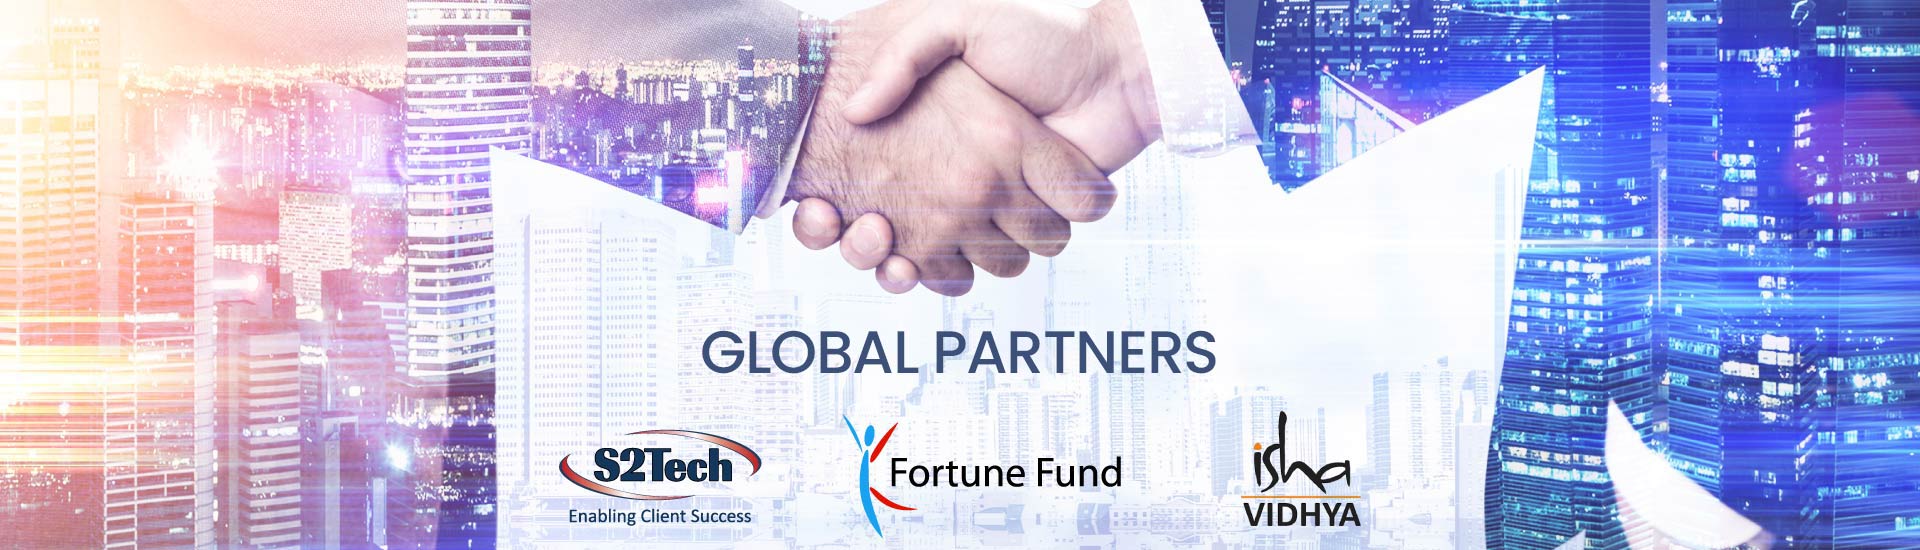 Global-partners